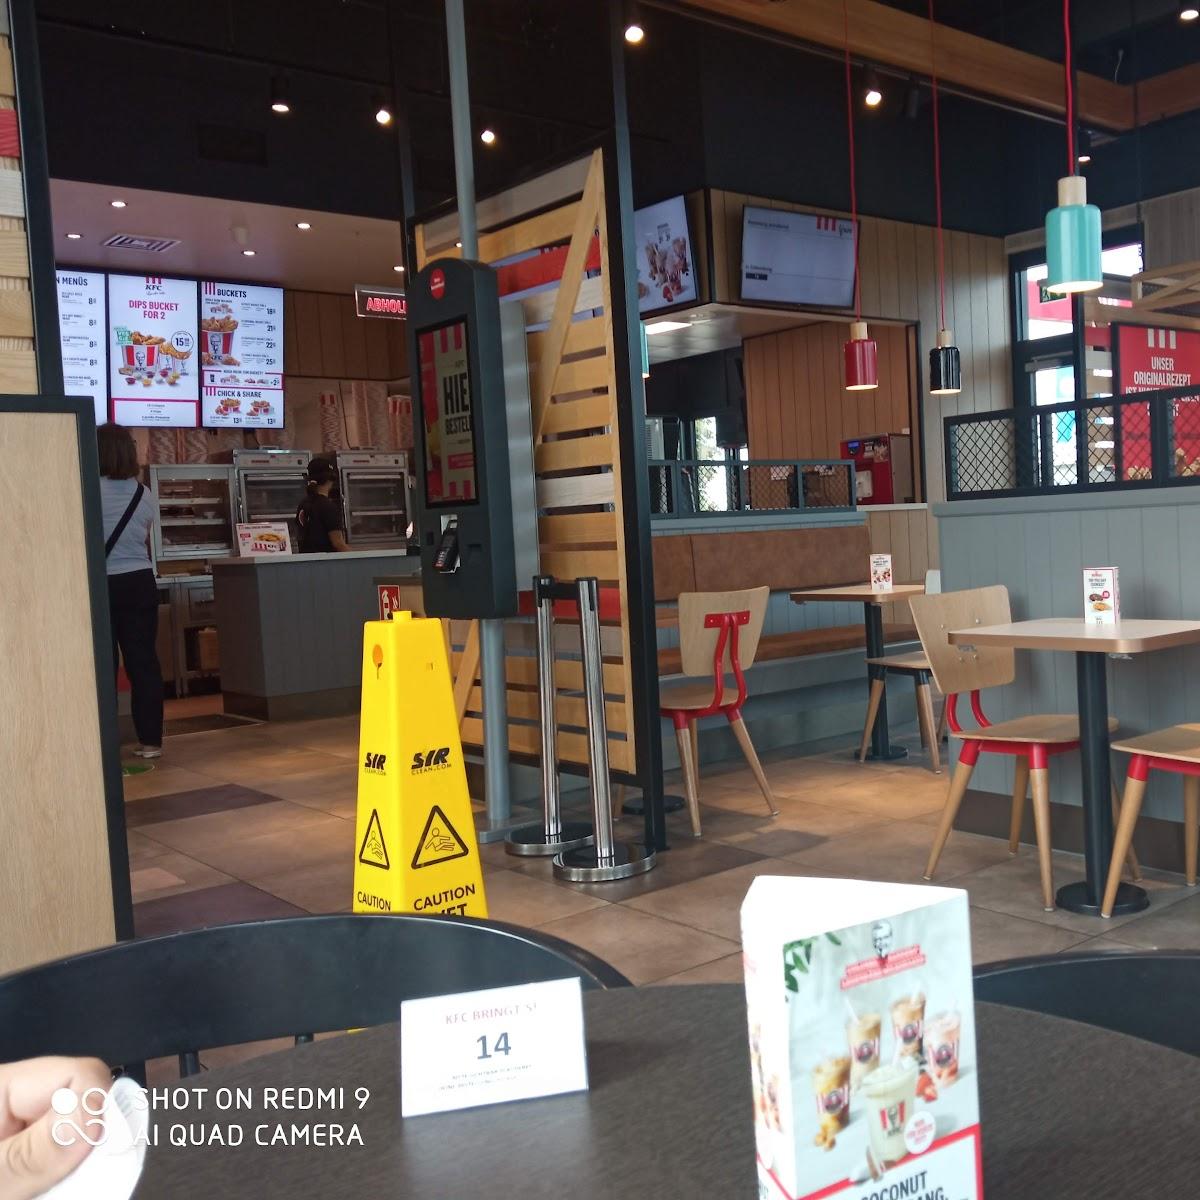 Restaurant "KFC - Kentucky Fried Chicken" in Husum